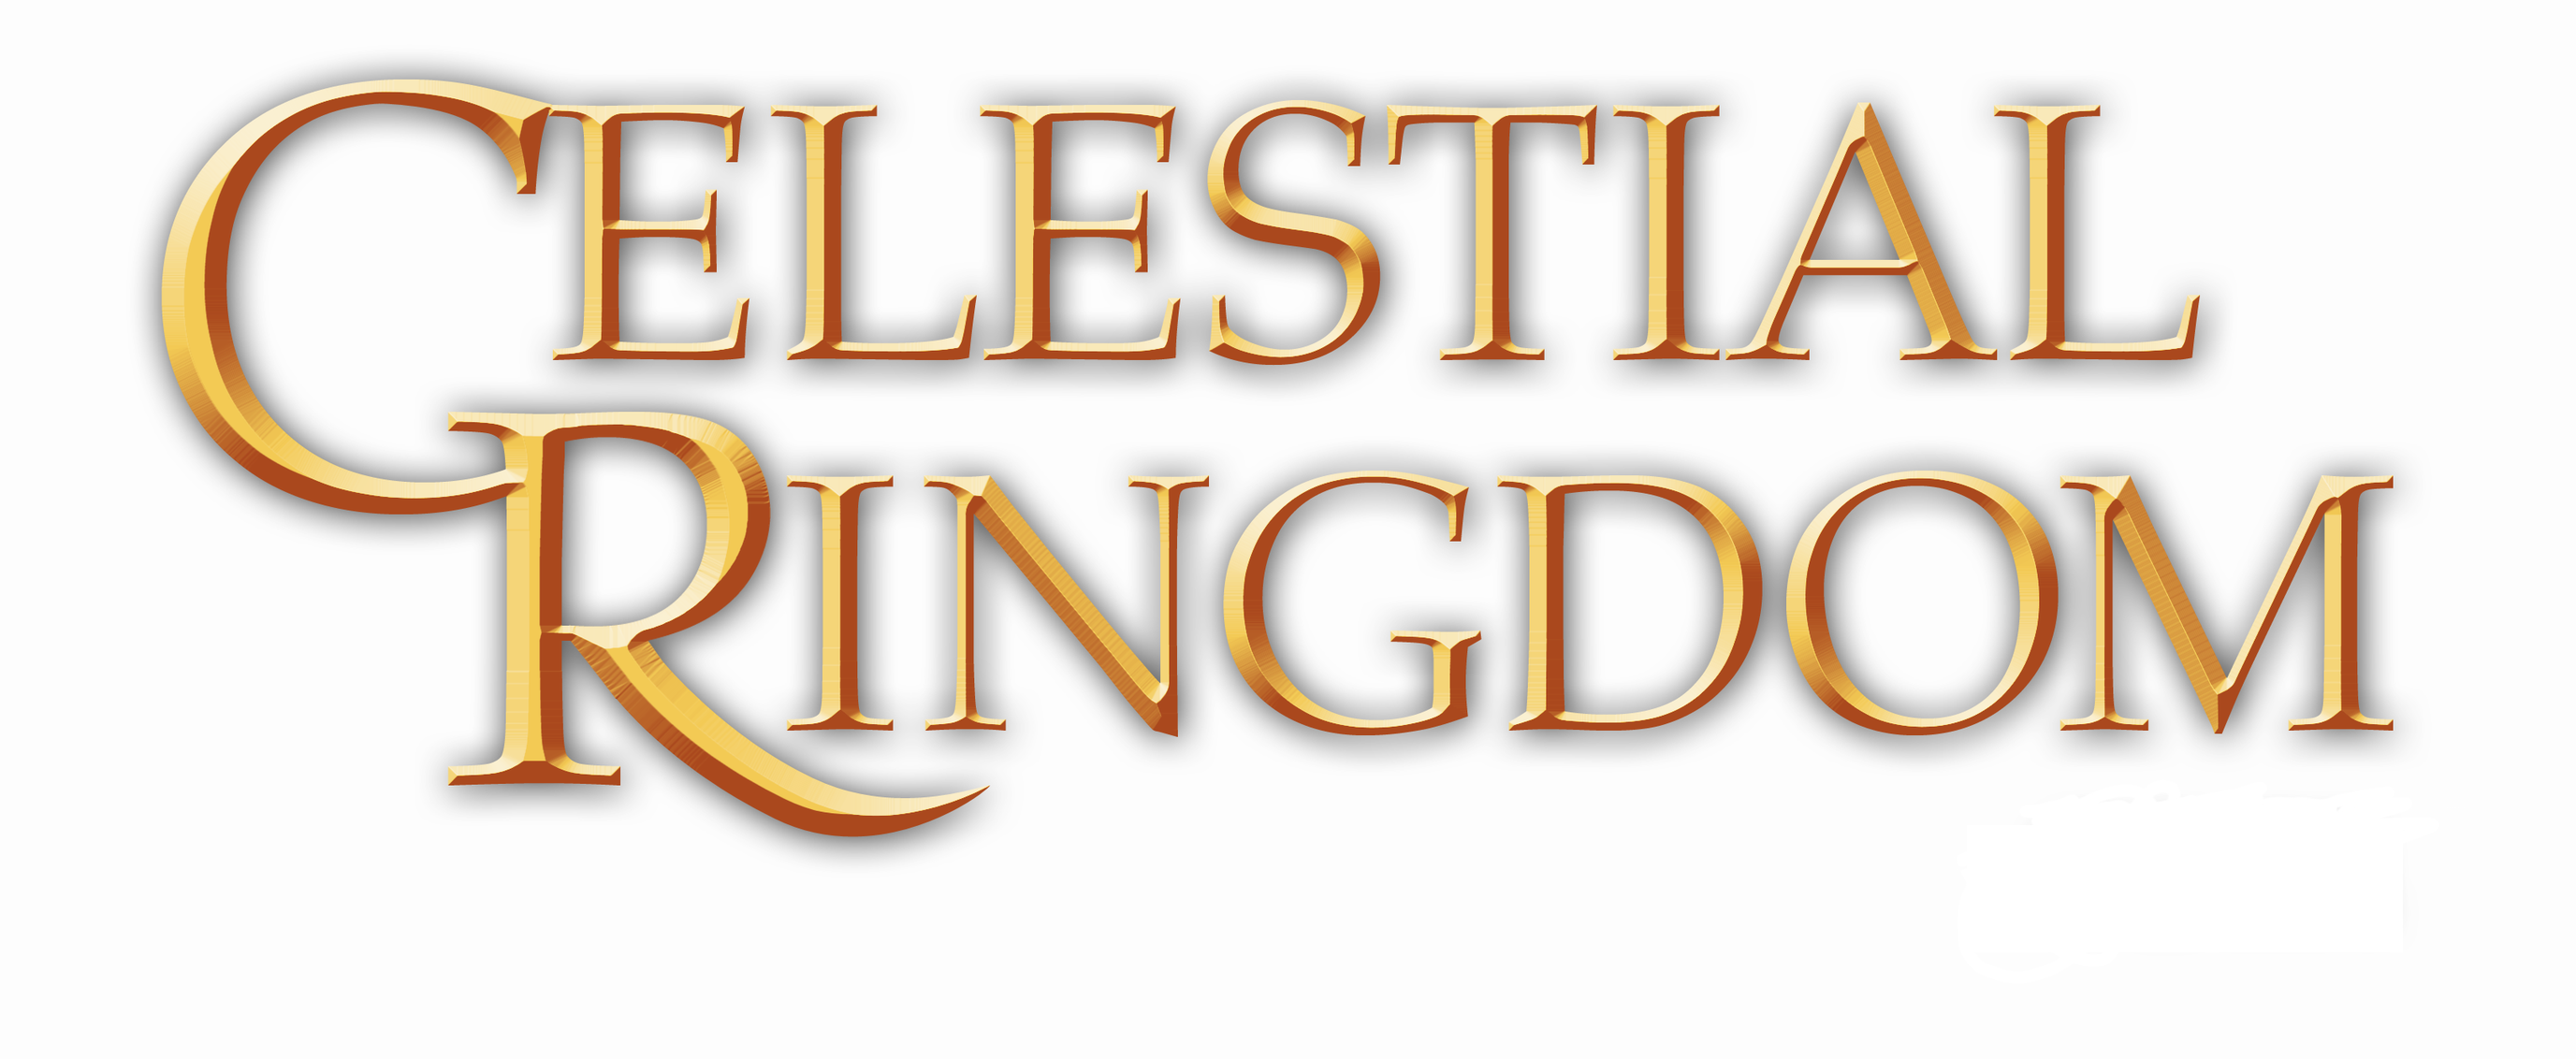 Celestial Ringdom